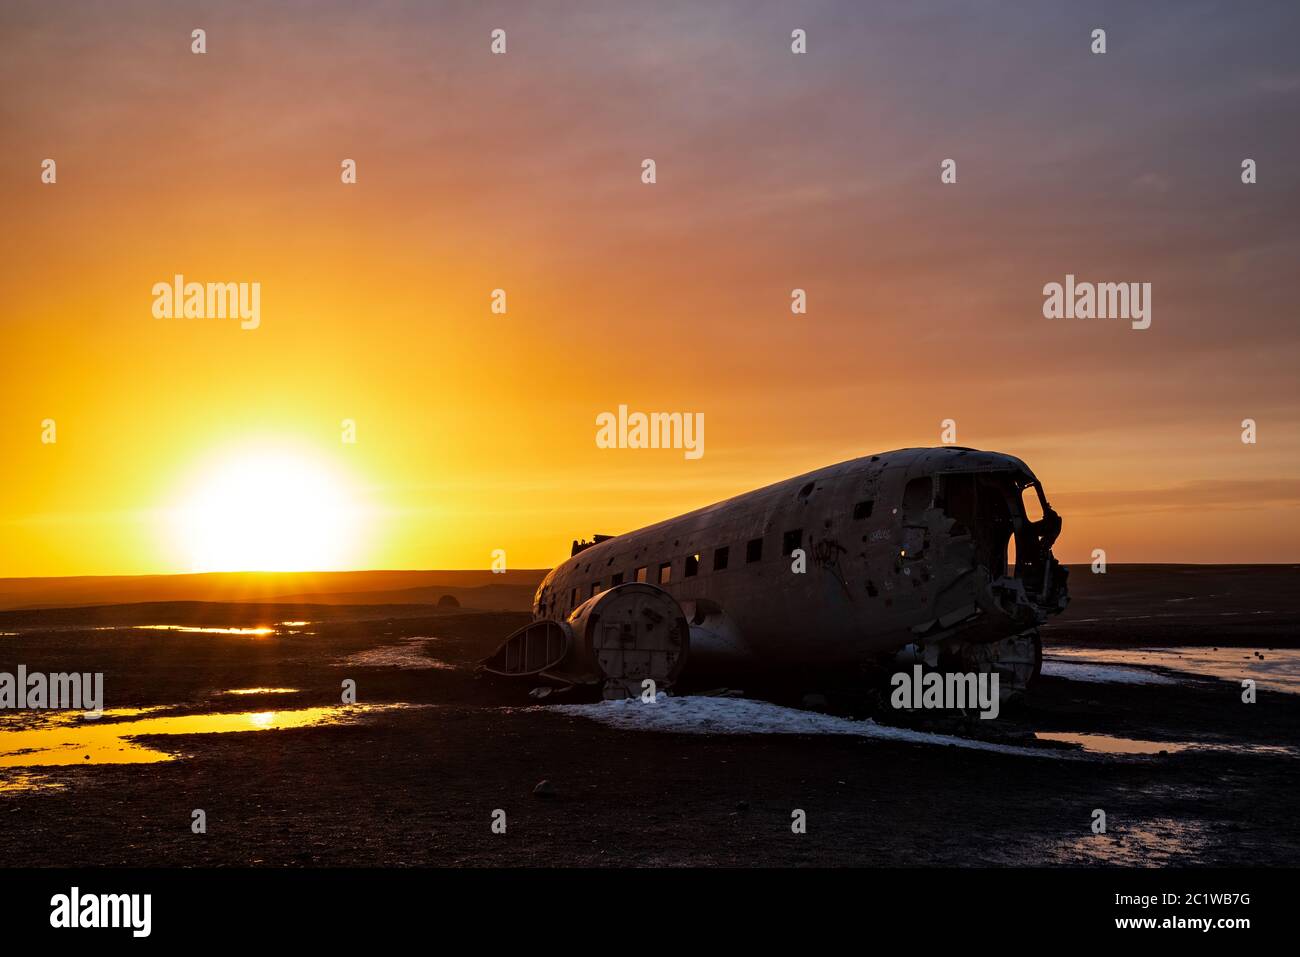 The plane wreck in Solheimasandur, Iceland Stock Photo